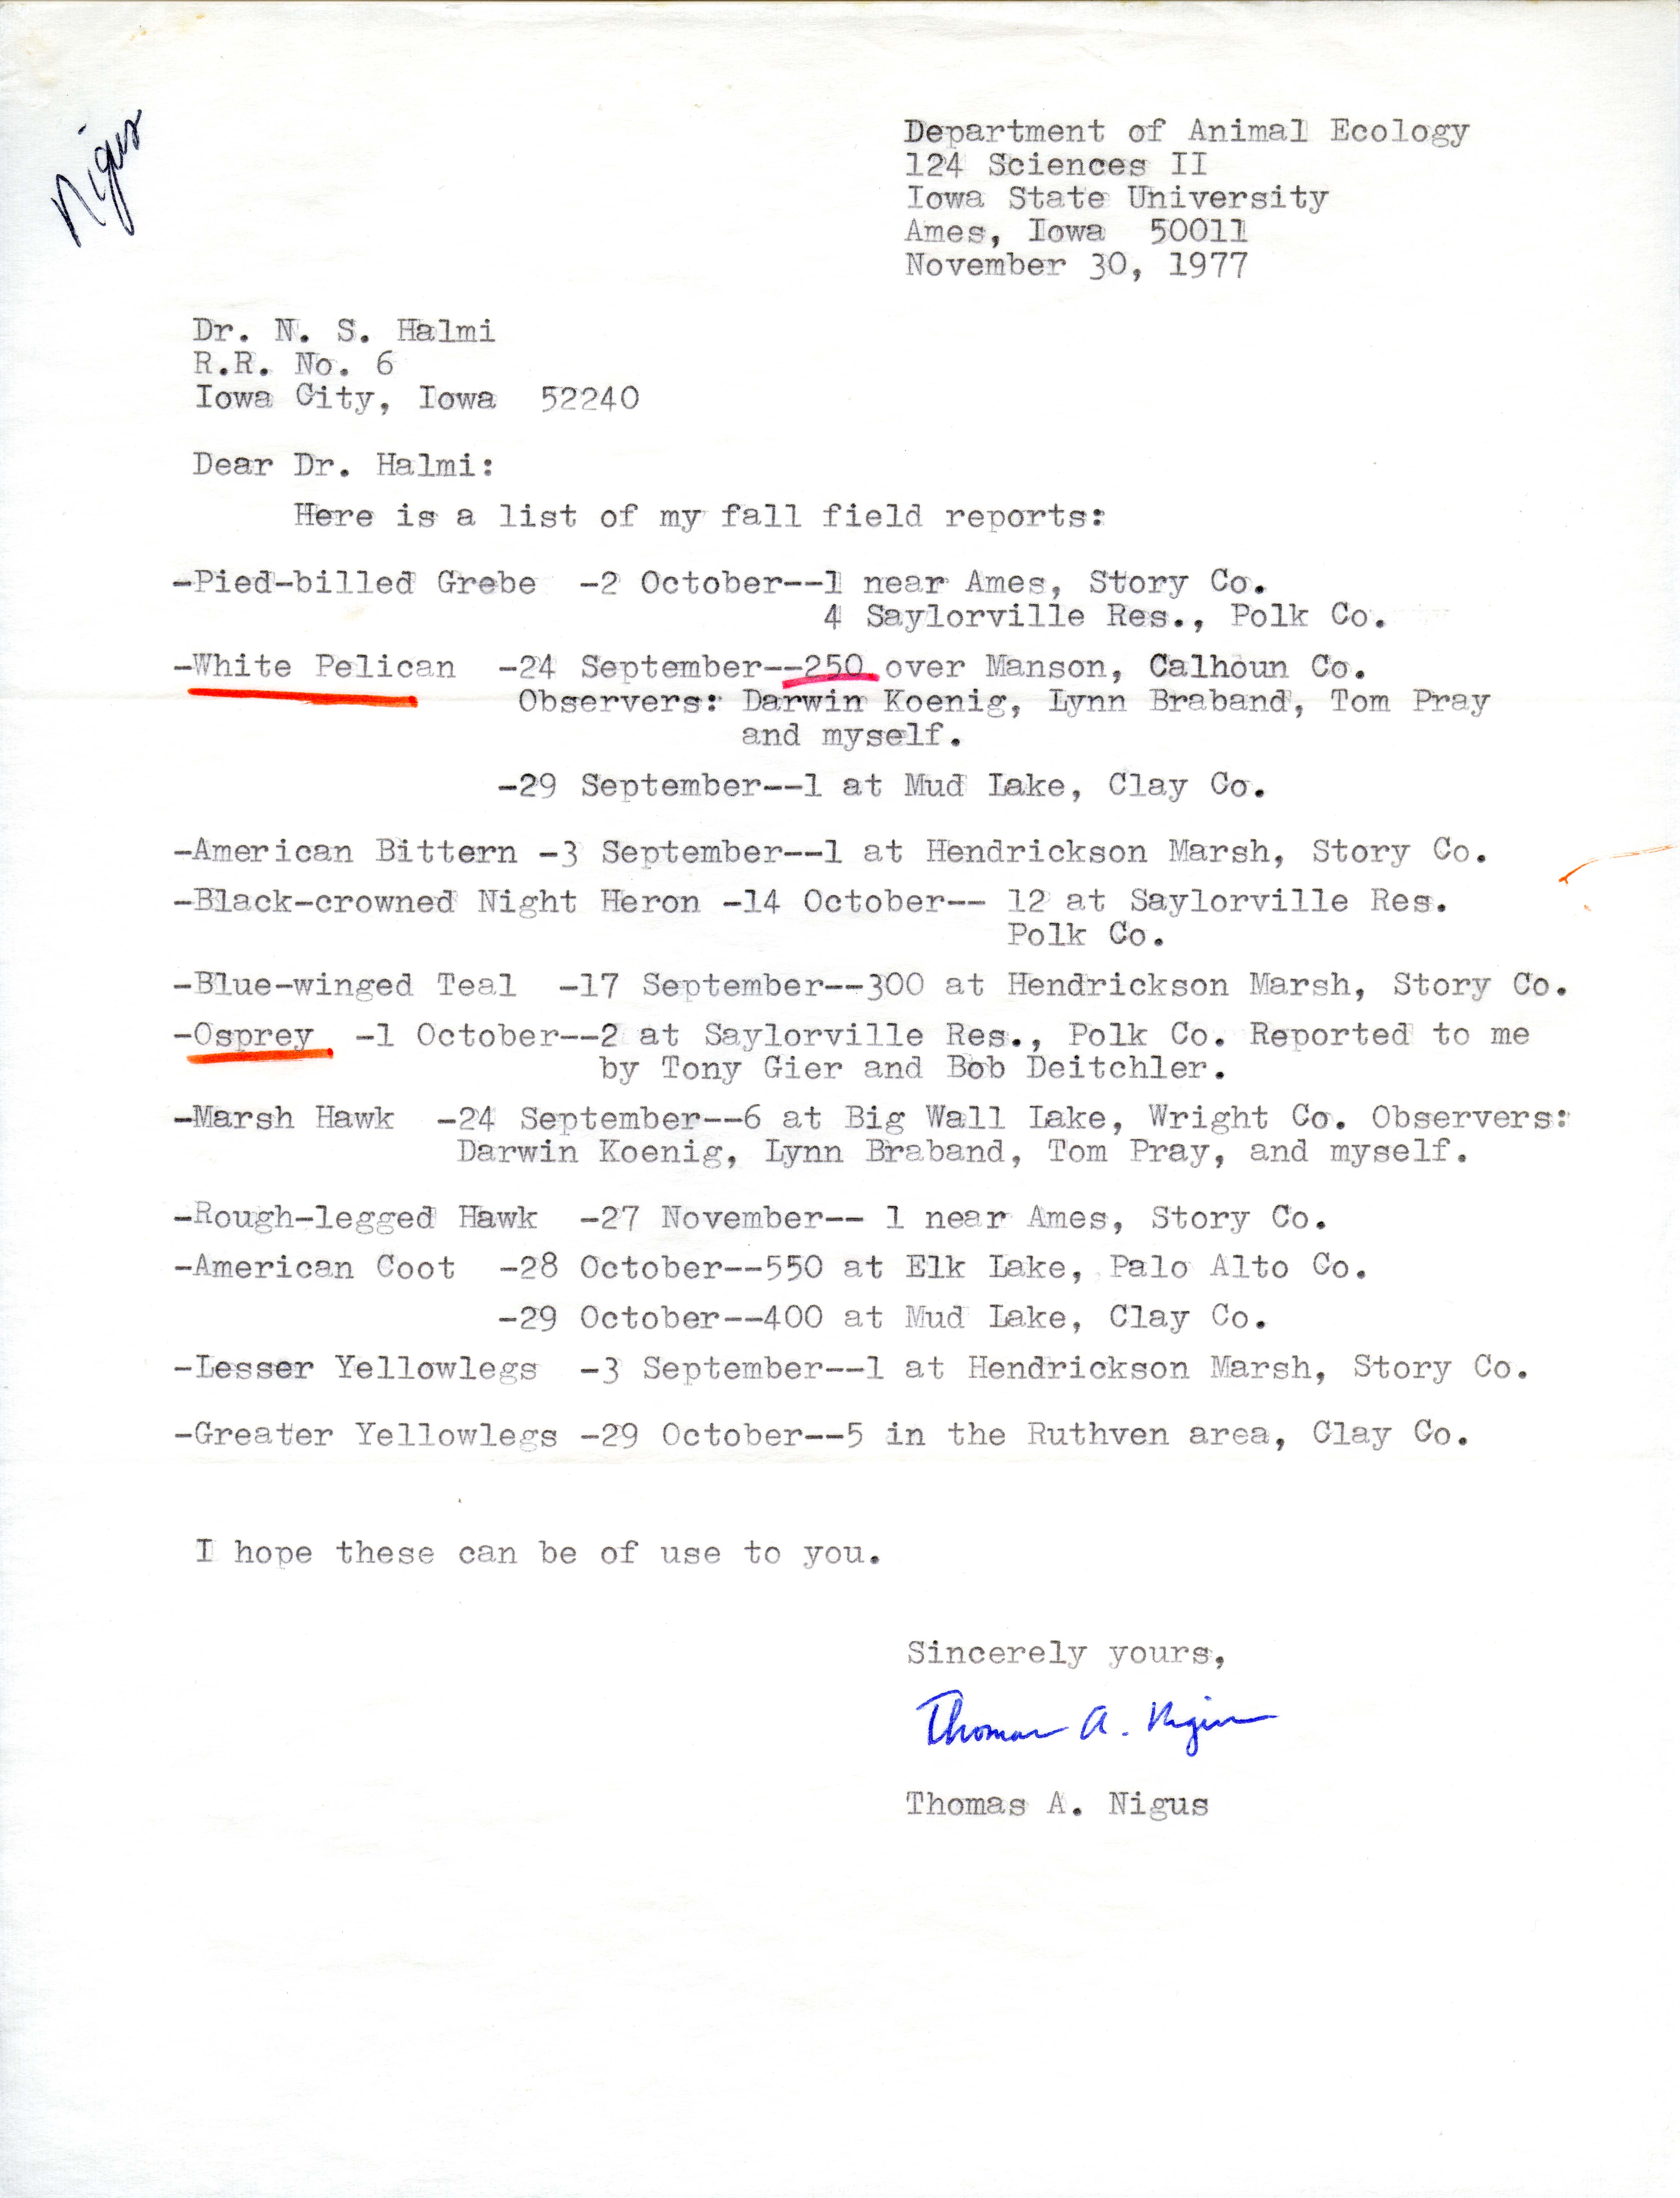 Tom Nigus letter to Nicholas S. Halmi regarding bird sightings, November 30, 1977